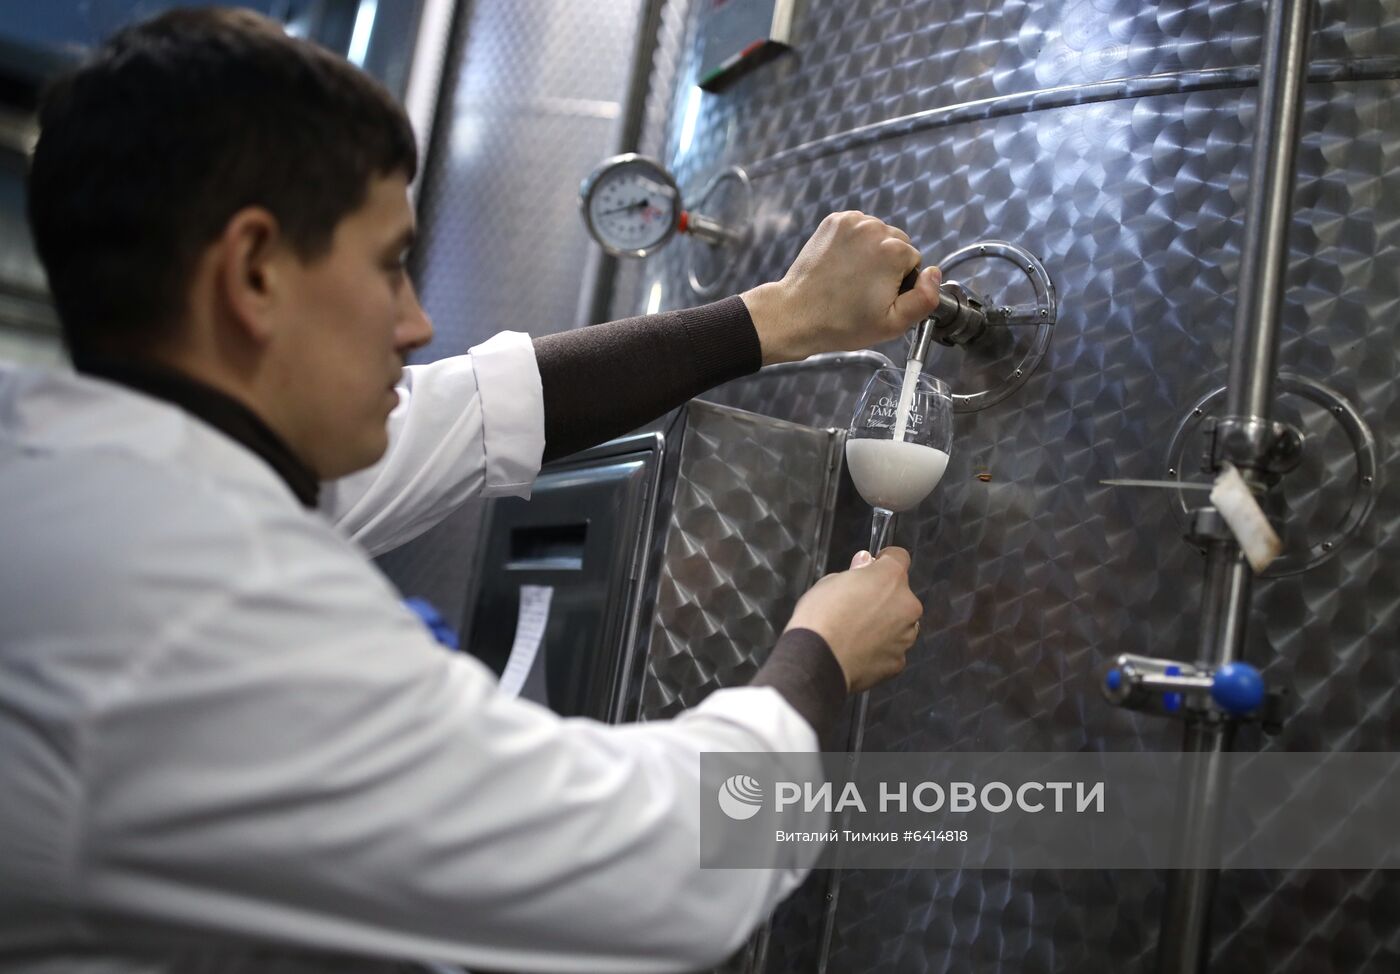 Производство вина в Краснодарском крае